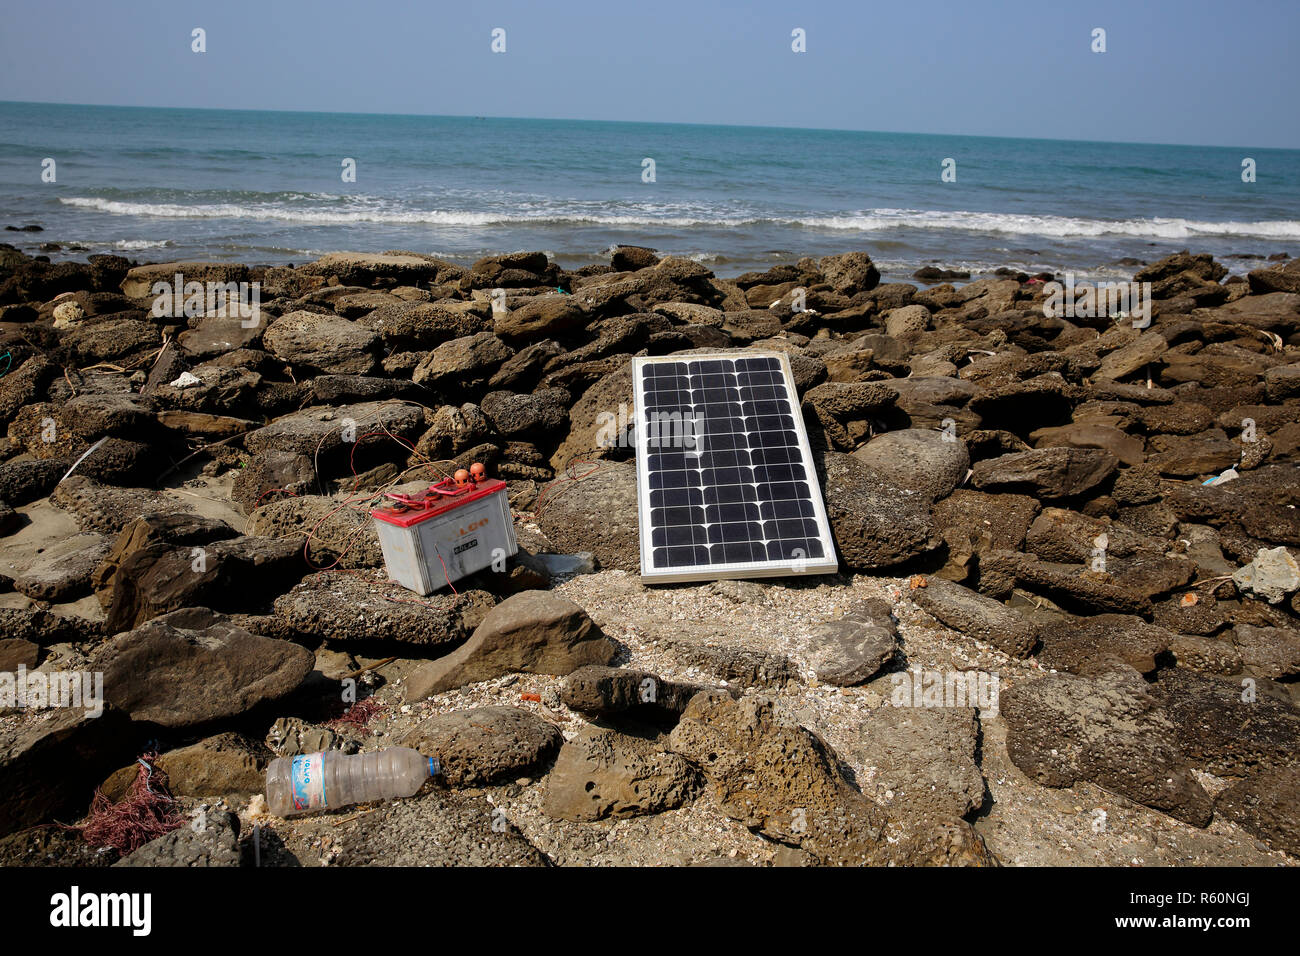 A solar panel lies under the sun on the sea beach at Saint Martin Island. Cox’s Bazar, Bangladesh. Stock Photo